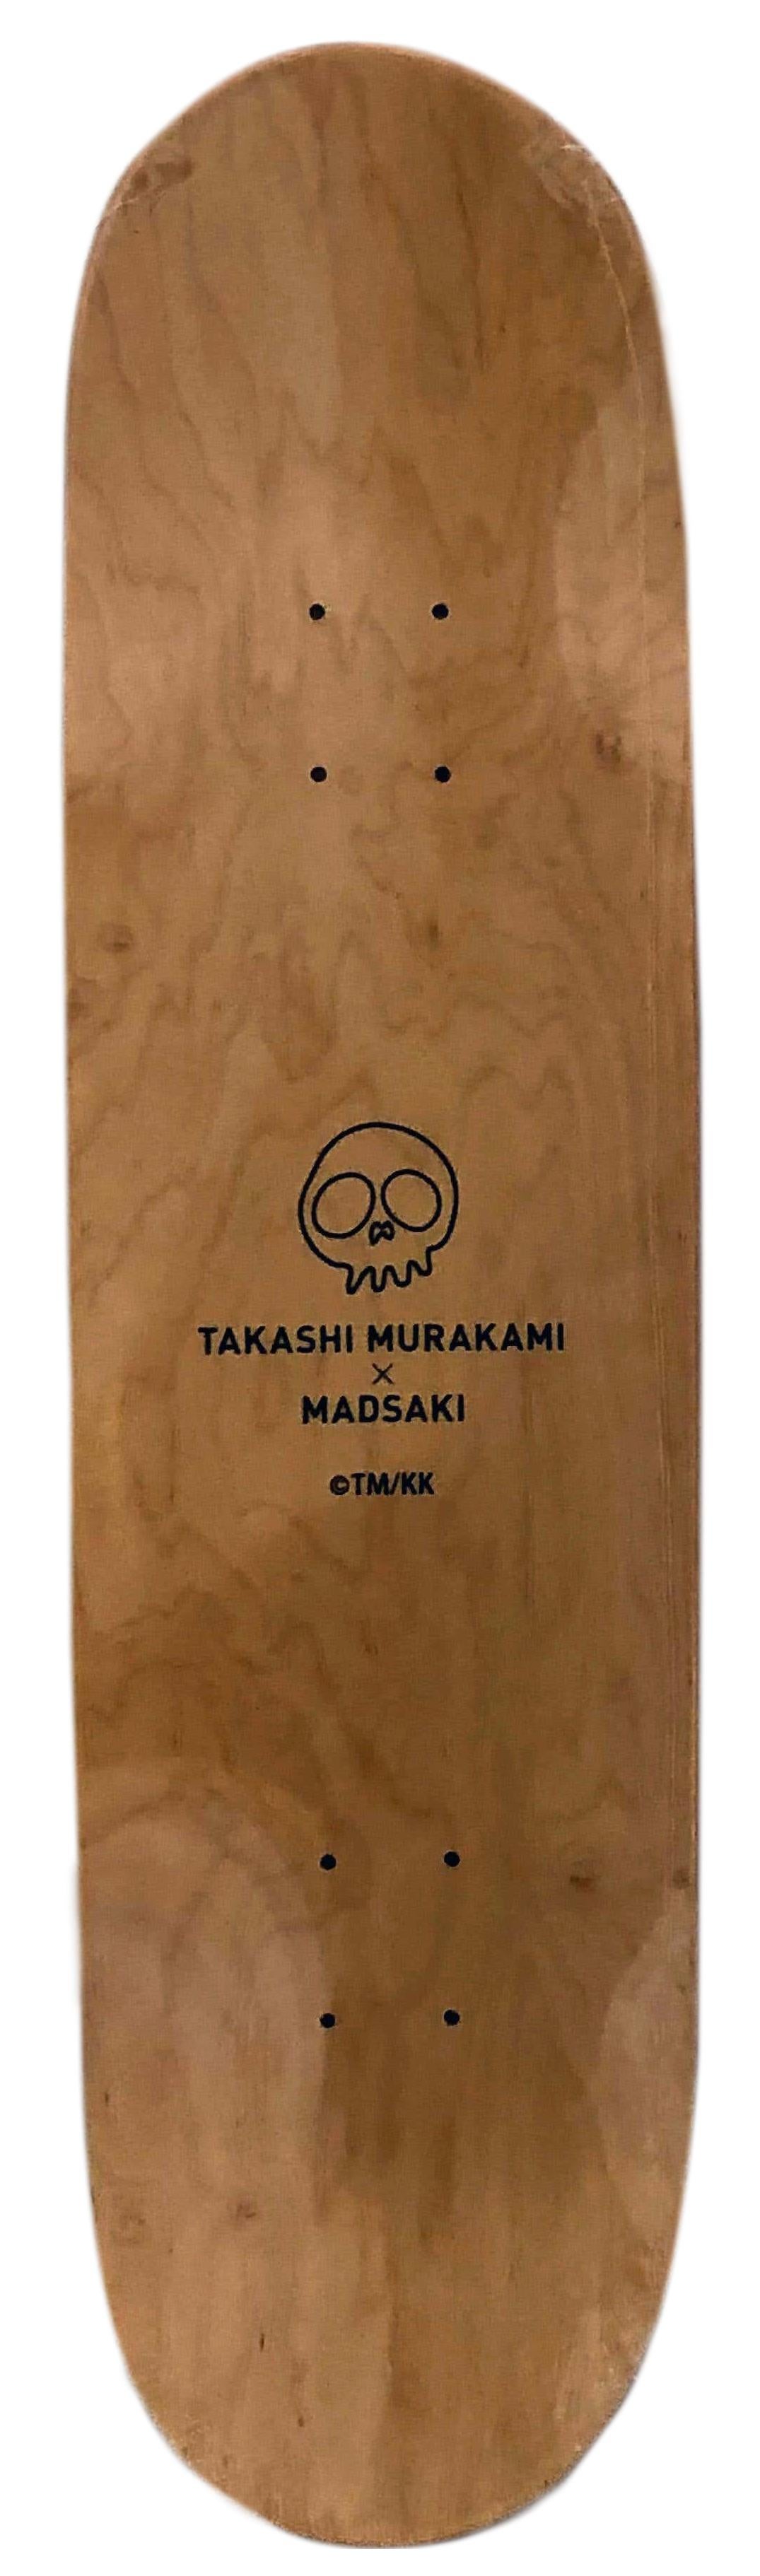 Takashi Murakami Flowers Skateboard Decks (set of 2 works): 
The black & white deck marks a collaboration between Takashi Murakami and his friend, the rising Japanese artist 'Madsaki' (bio below). The impression is an urban twist on Takashi